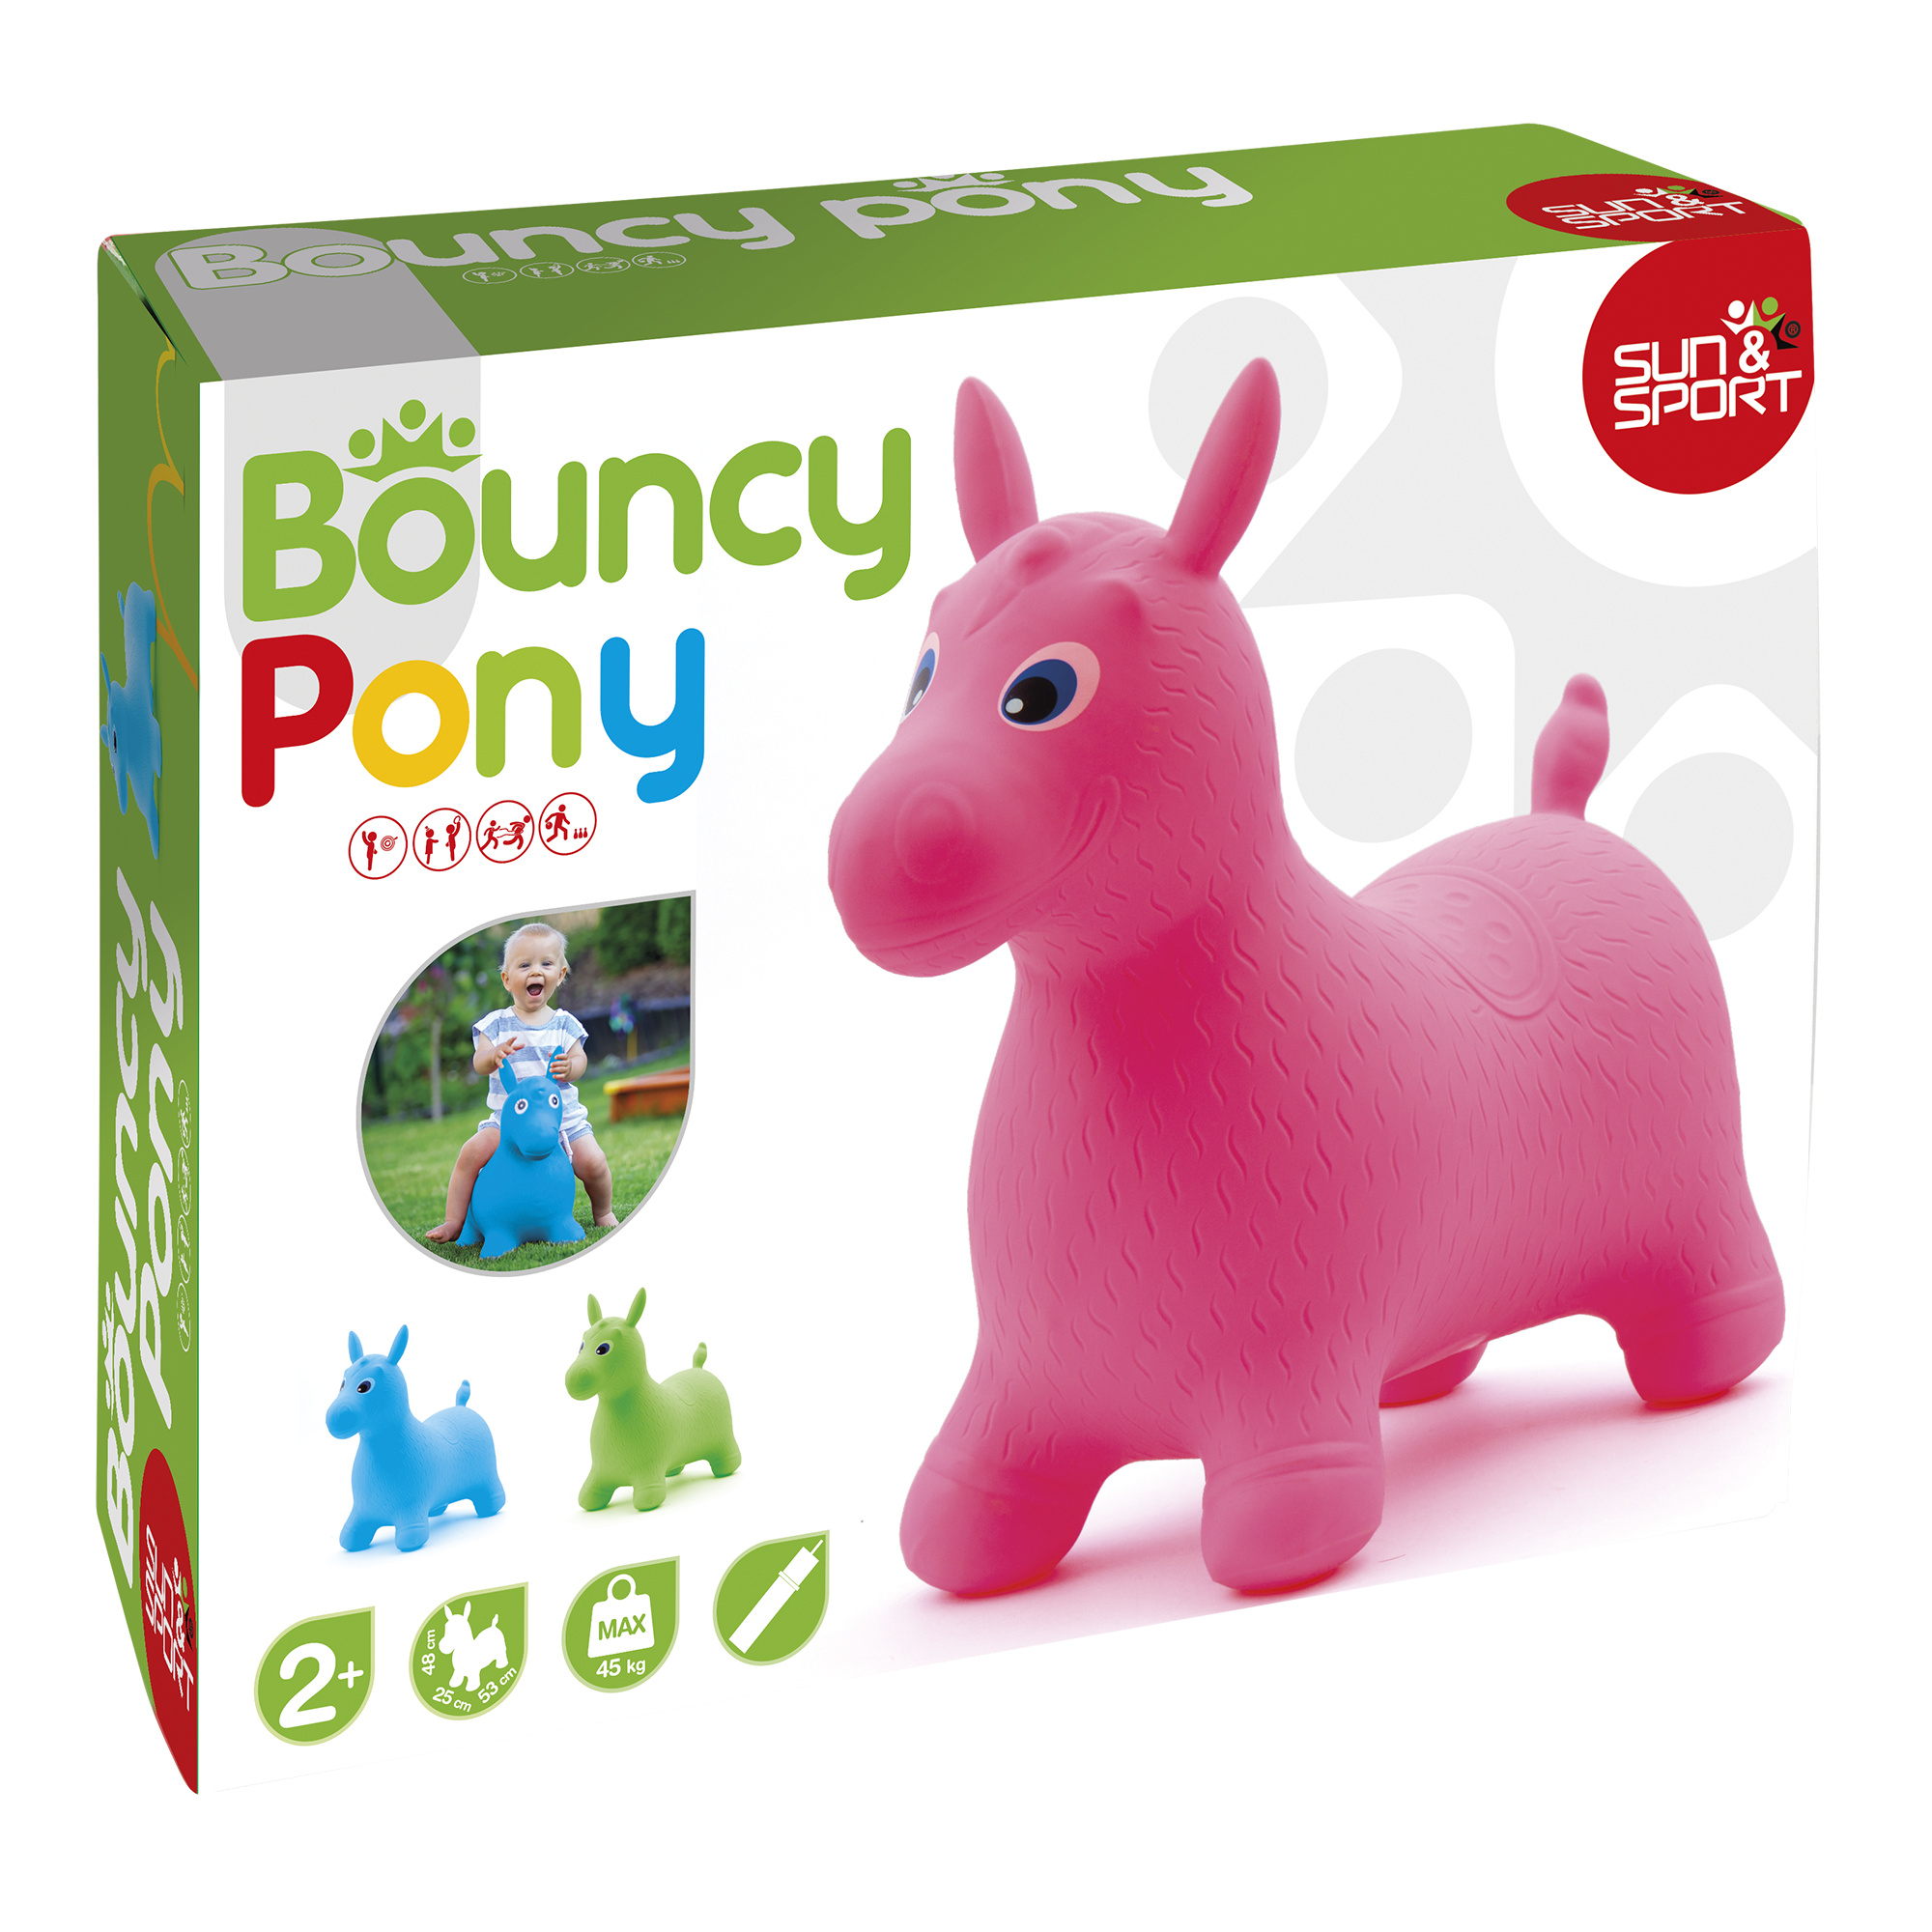 Bouncy pony assortito in vari colori - sun & sport - SUN&SPORT